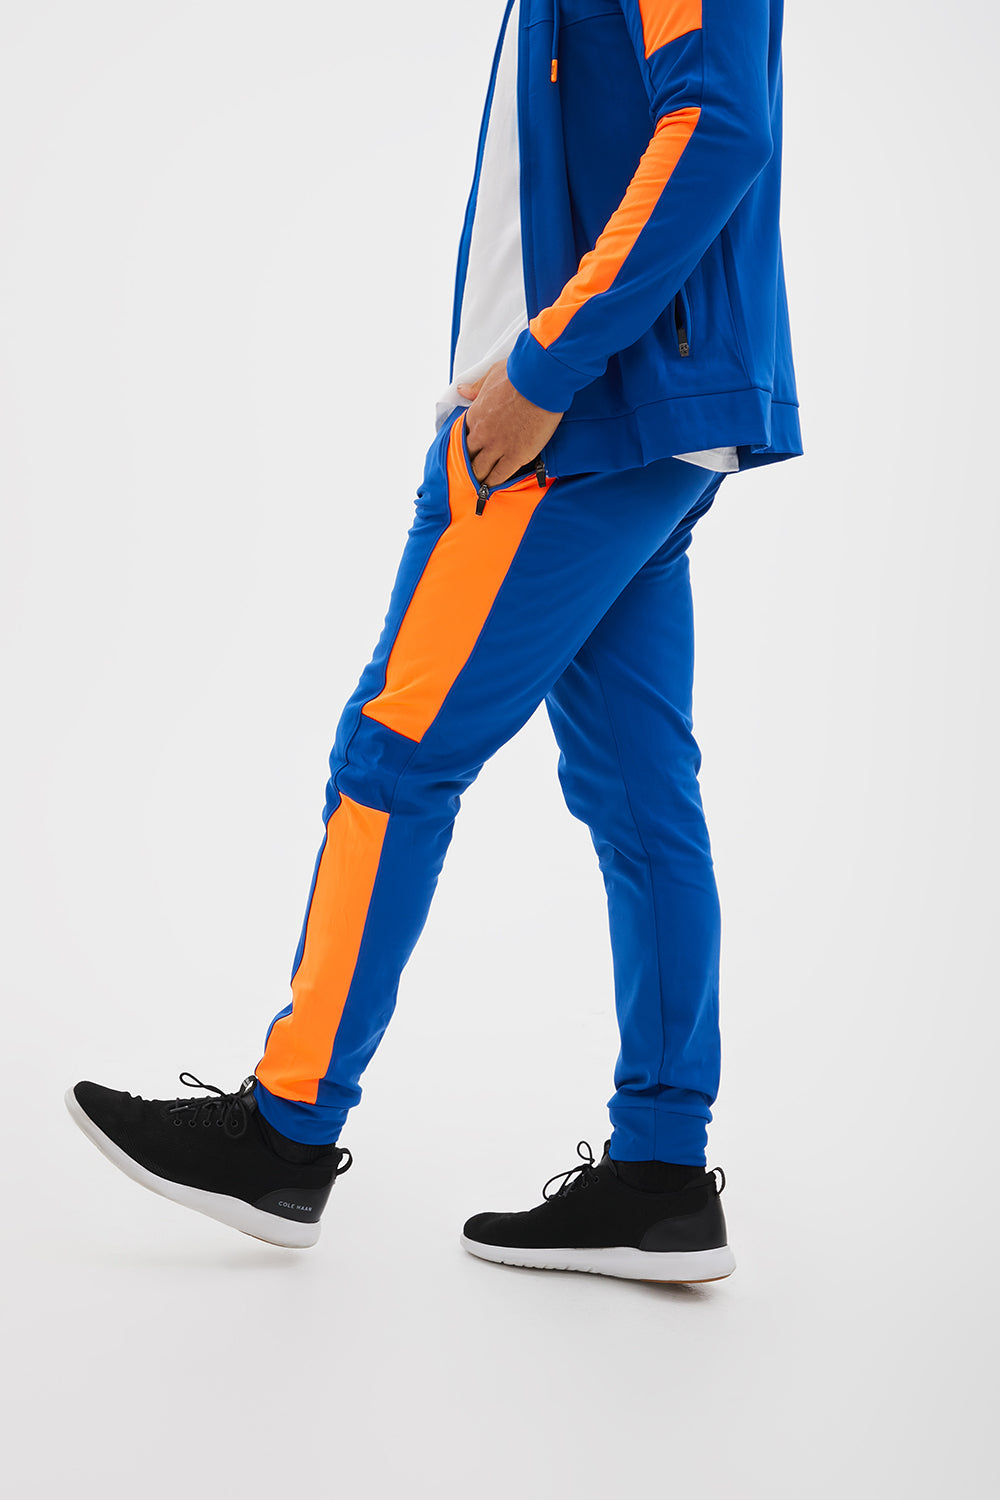 Black Label Blue and Orange Track Suit